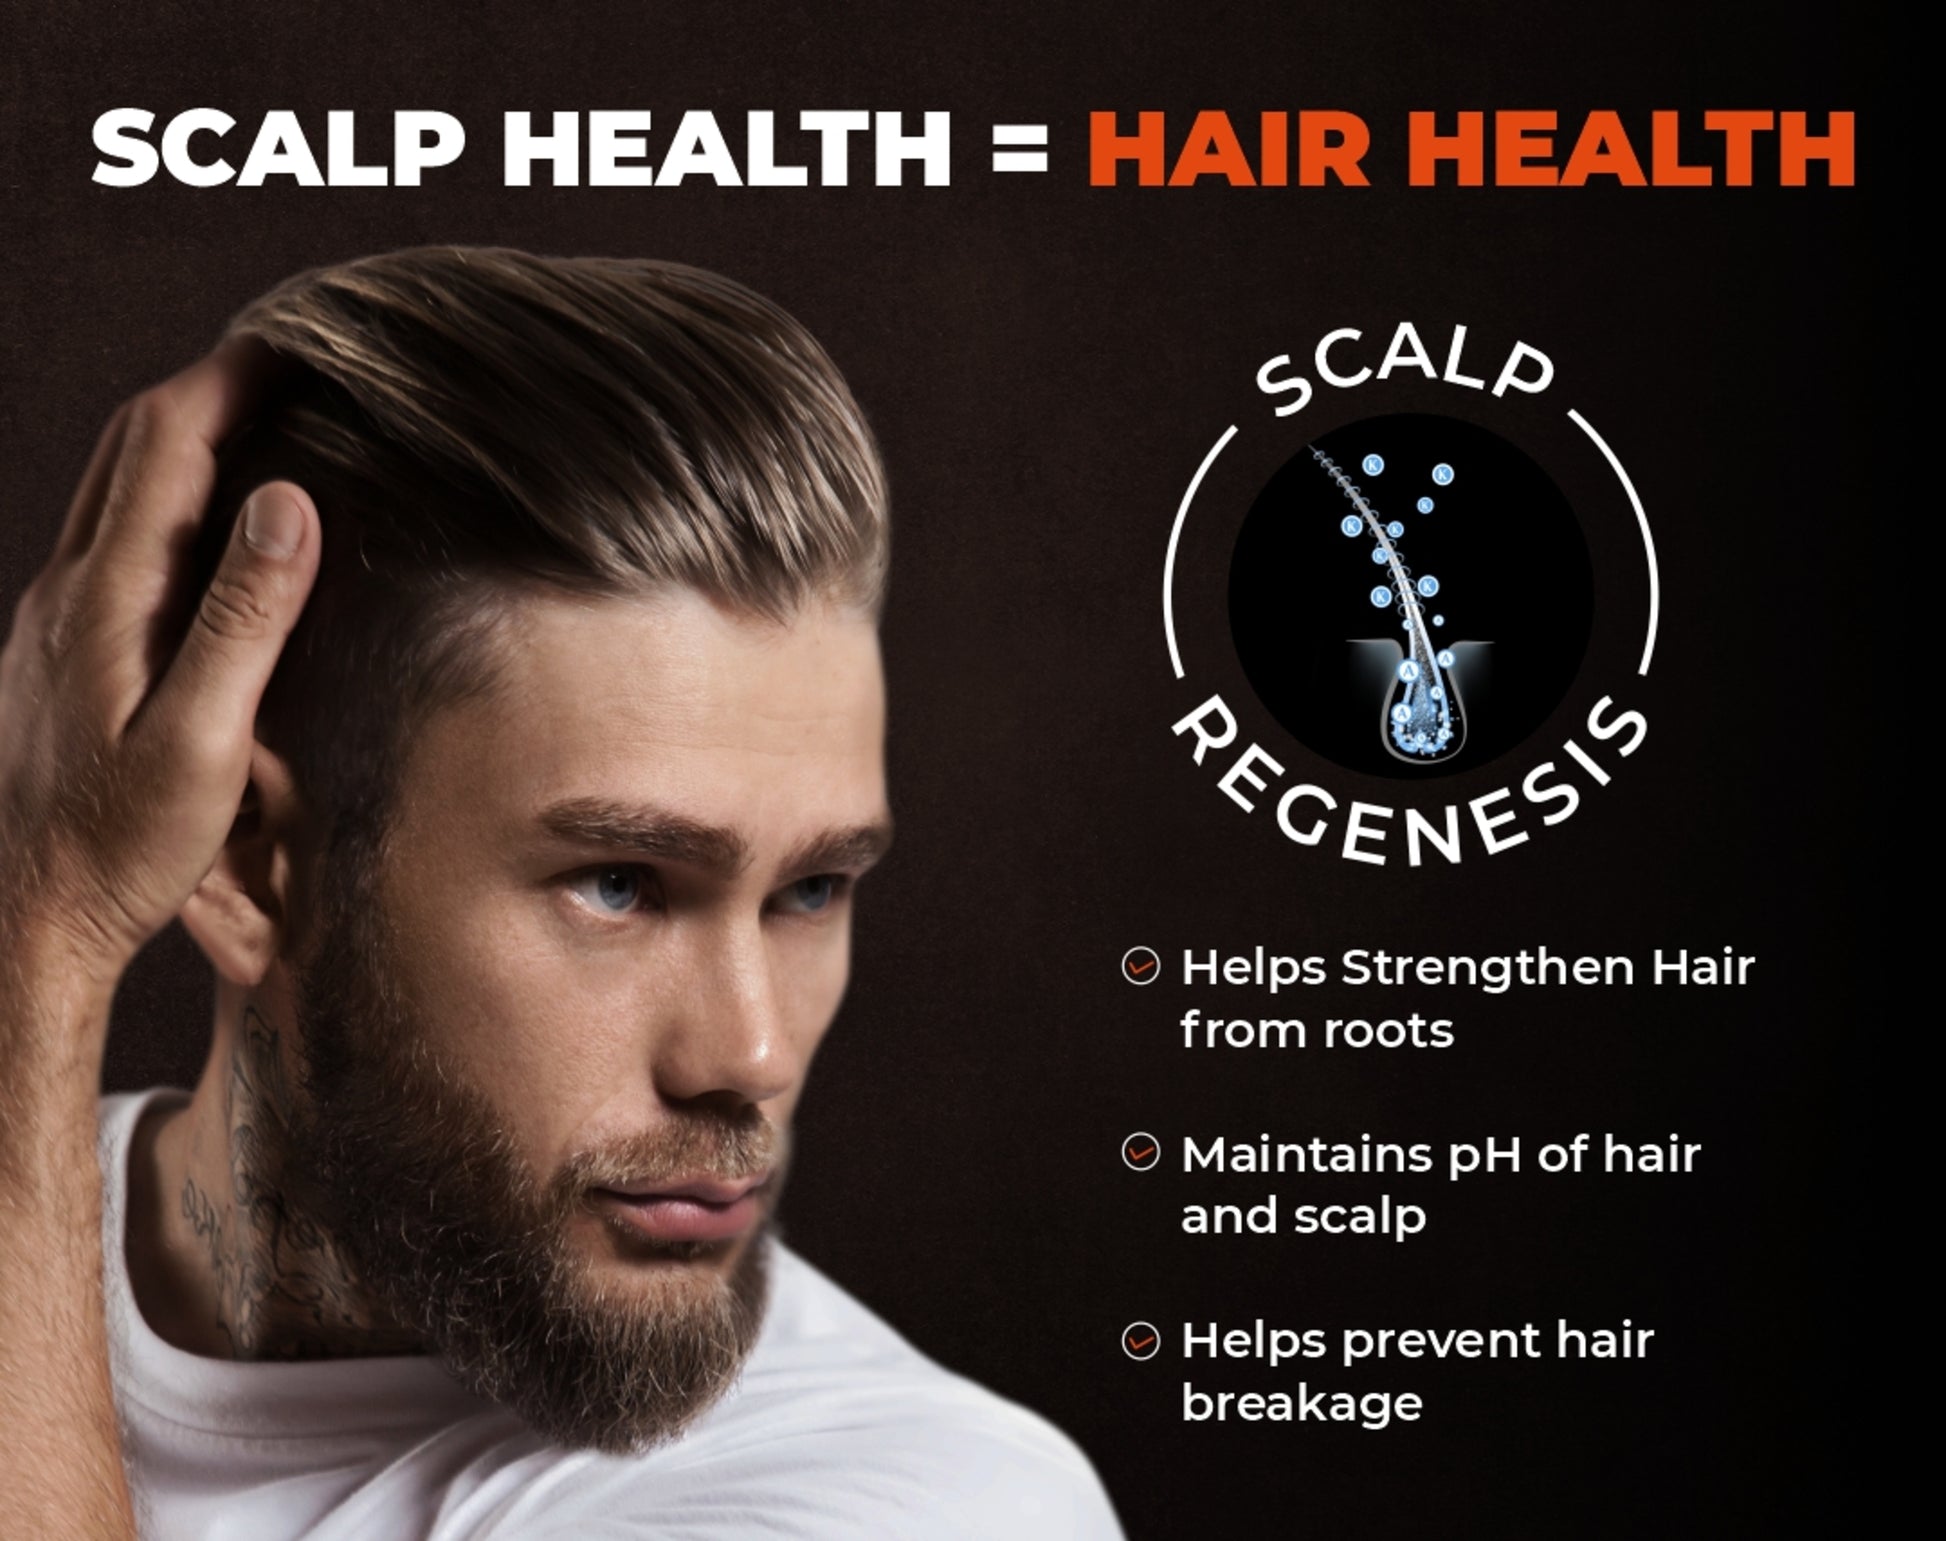 strengthens hair, prevents hair breakage, pH of hair and scalp